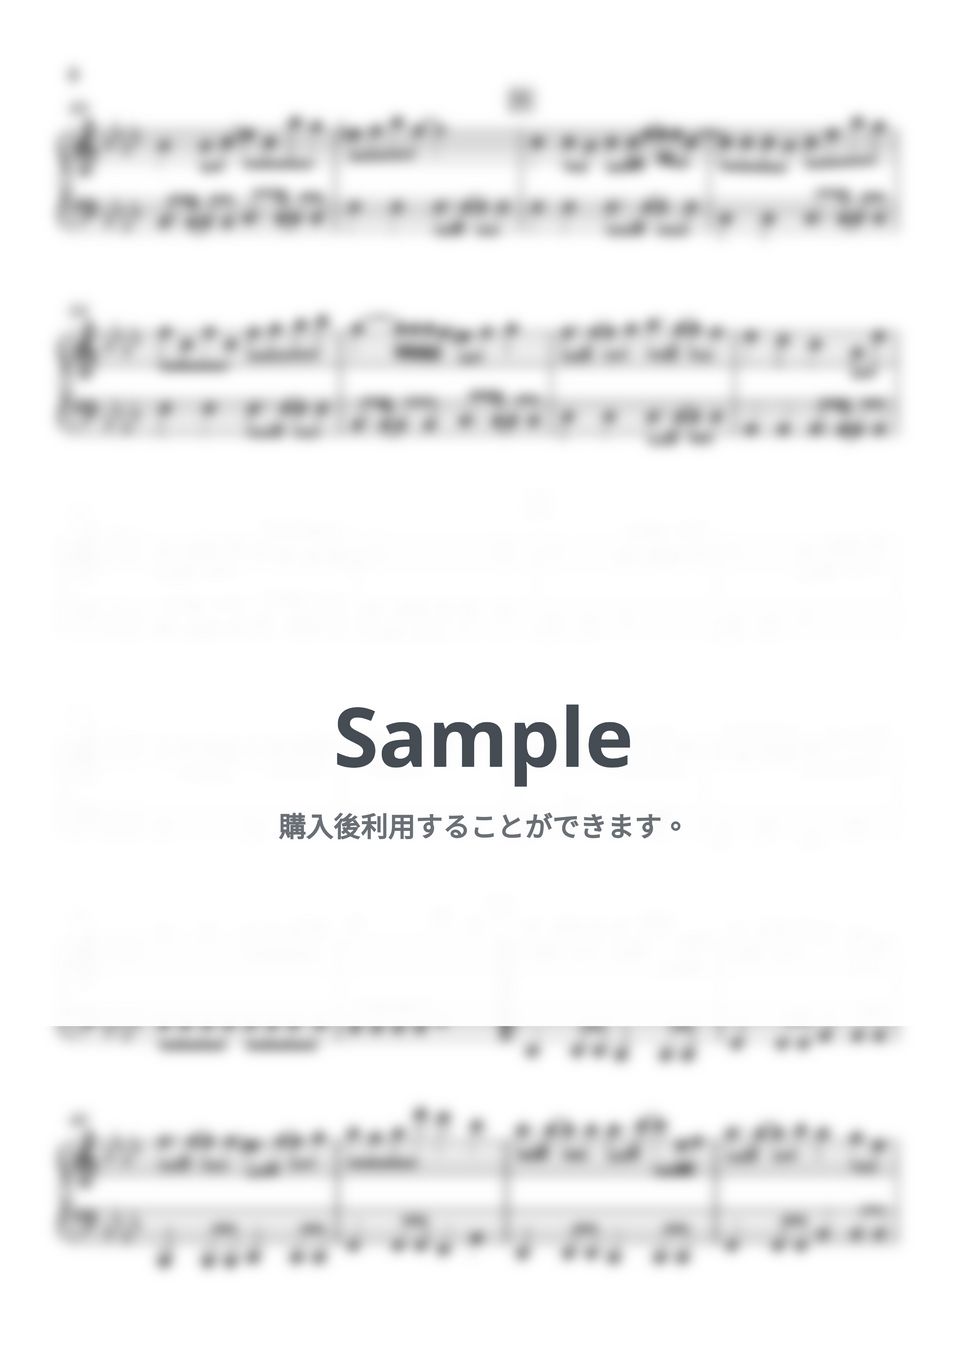 ZAQ - Dance In The Game (ようこそ実力至上主義の教室へ) by Piano Lovers. jp